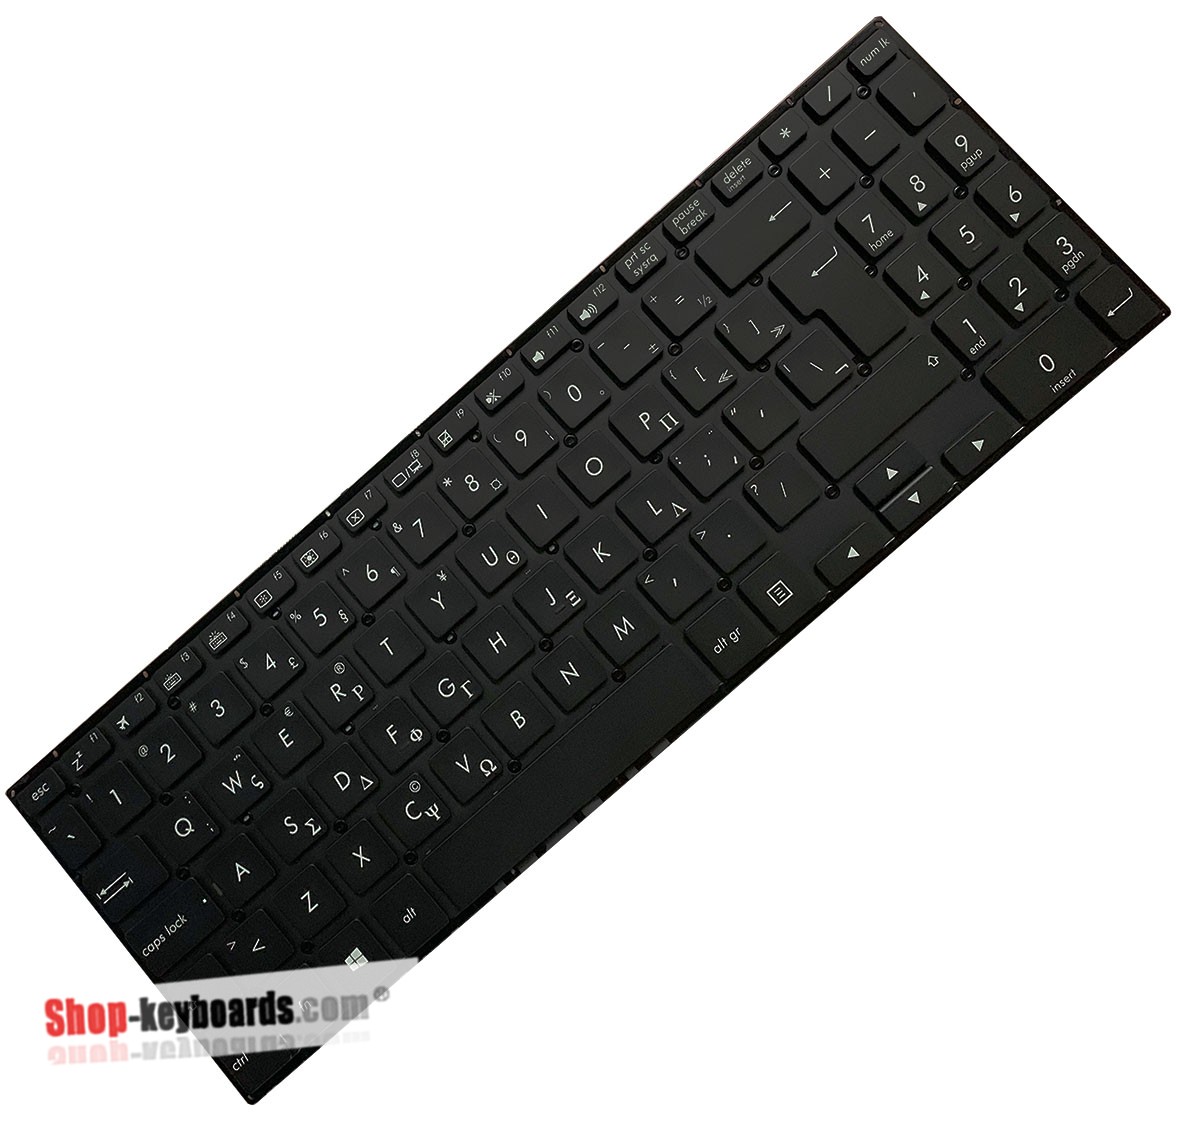 Asus 0KNB0-5630UI00 Keyboard replacement